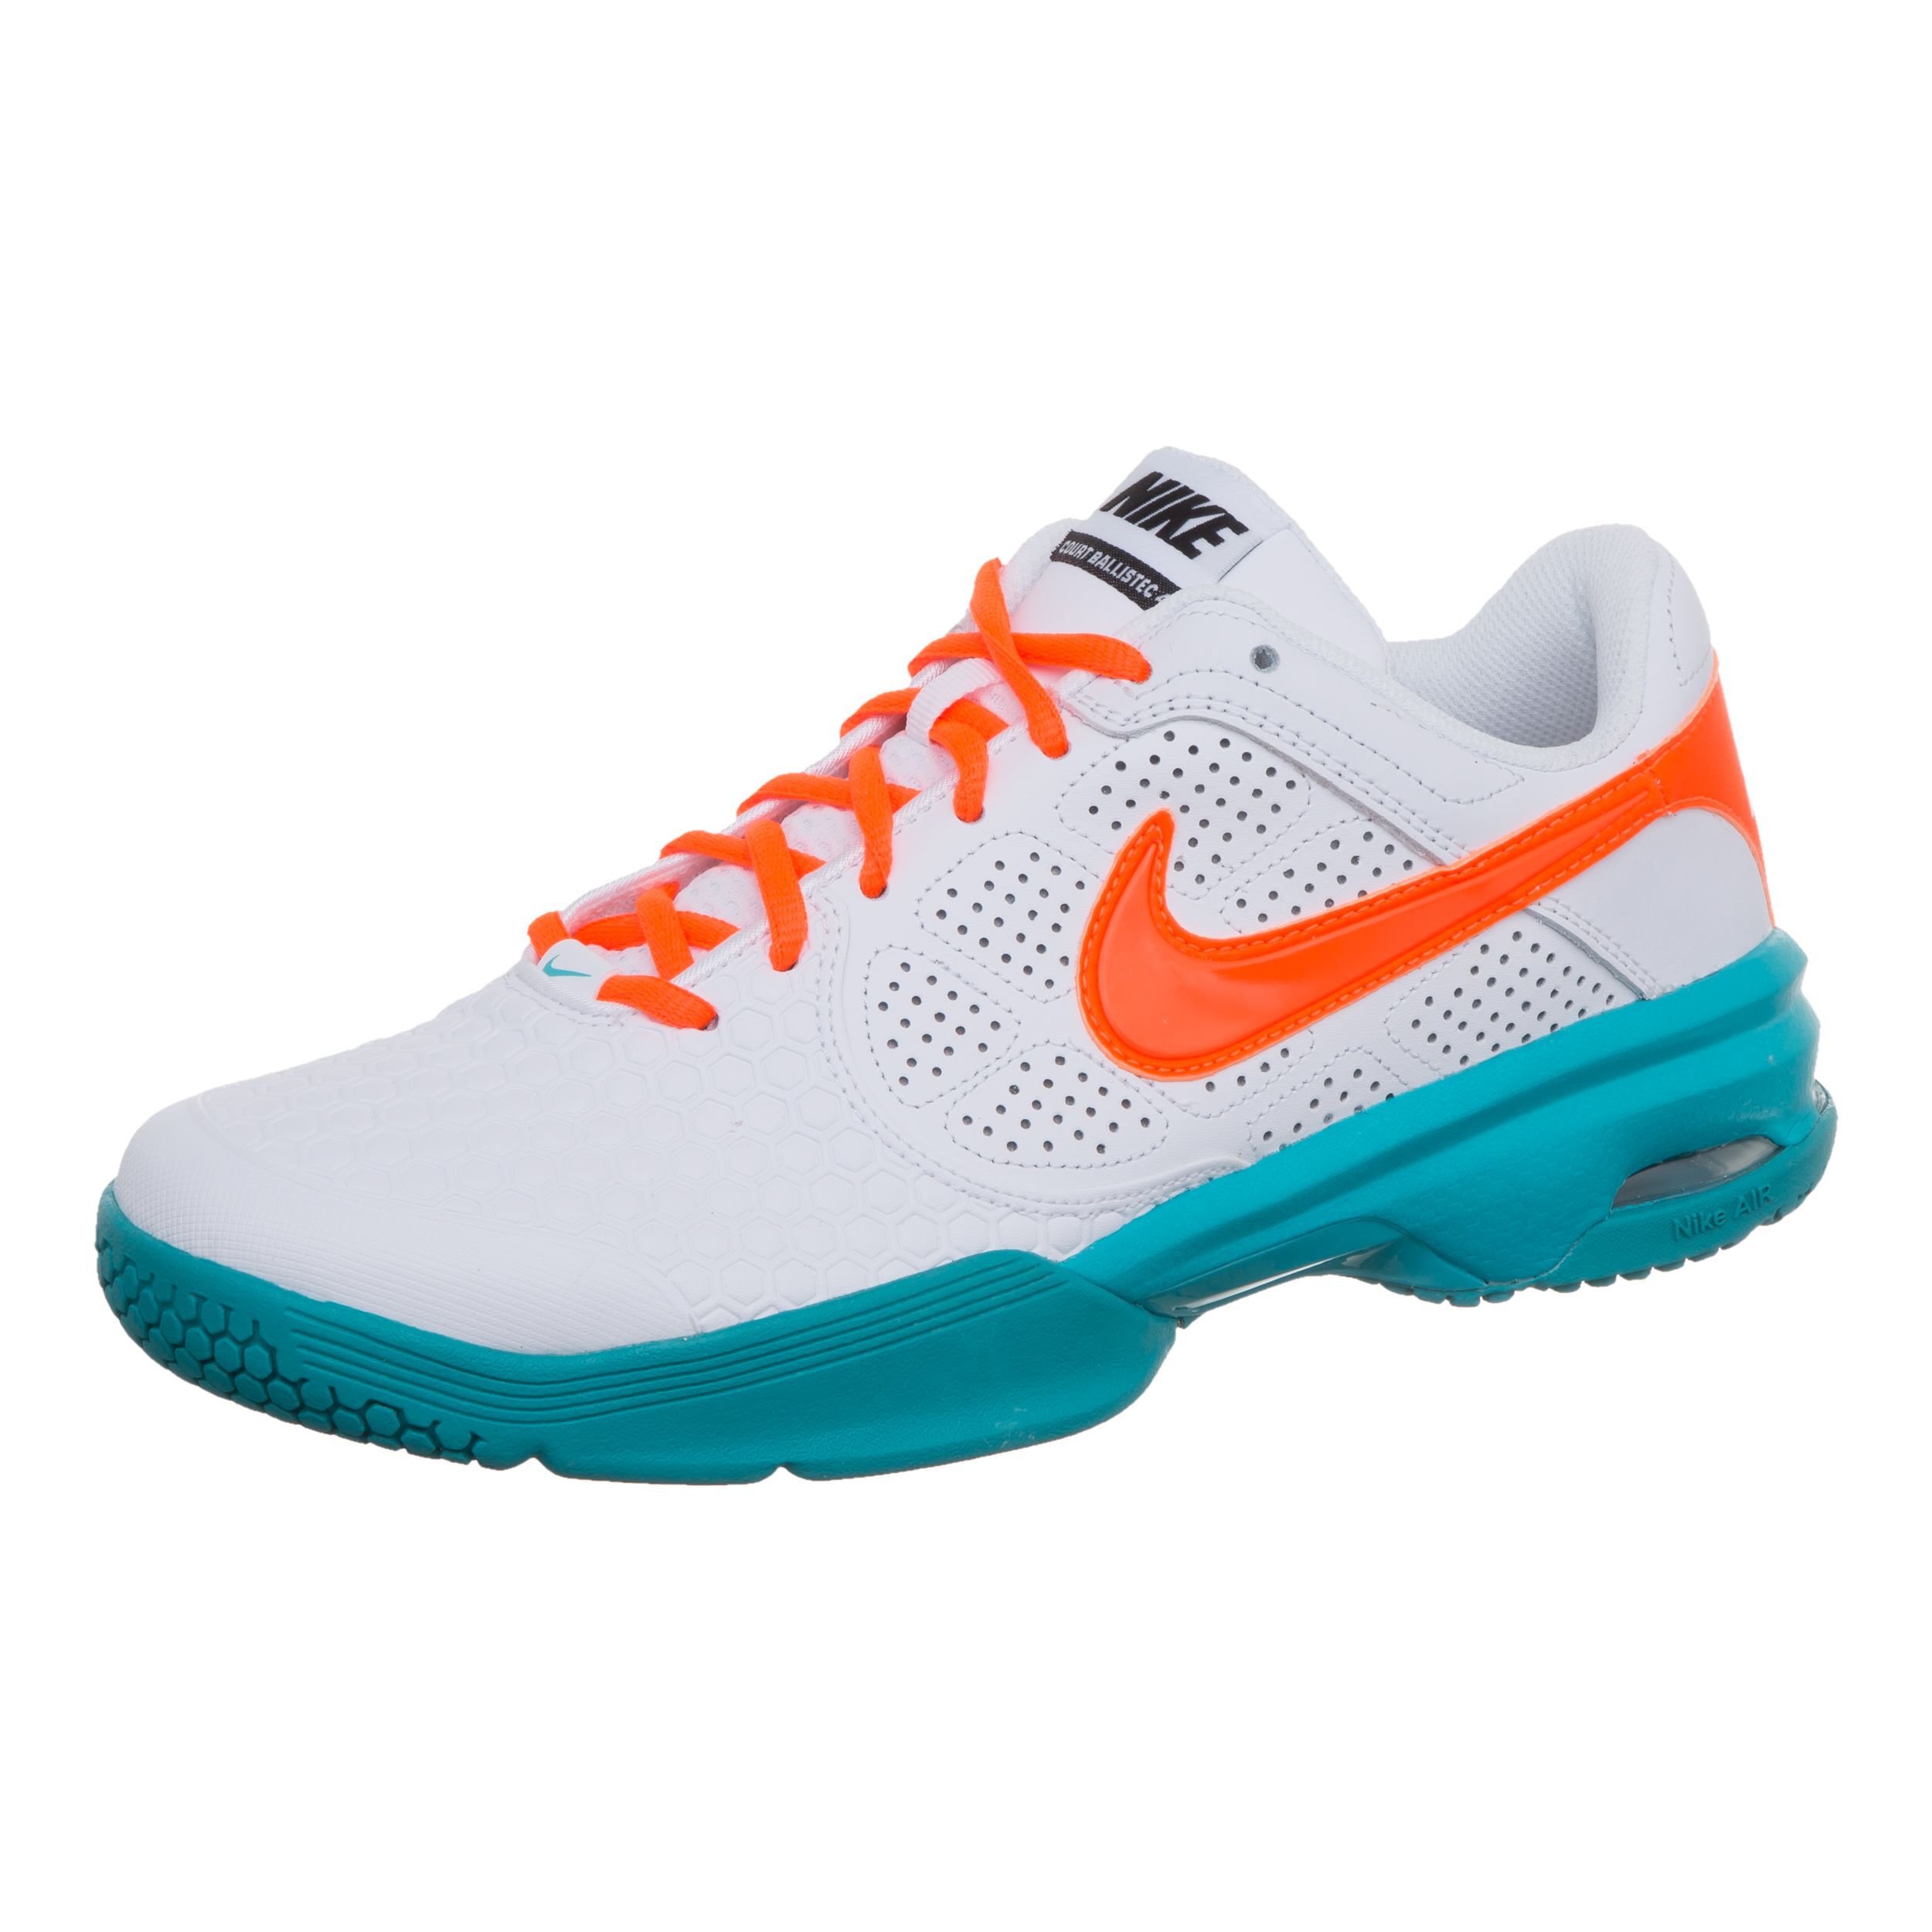 buy Nike Air Courtballistec 4.1 All Court Shoe Men - White, Neon Orange  online | Tennis-Point